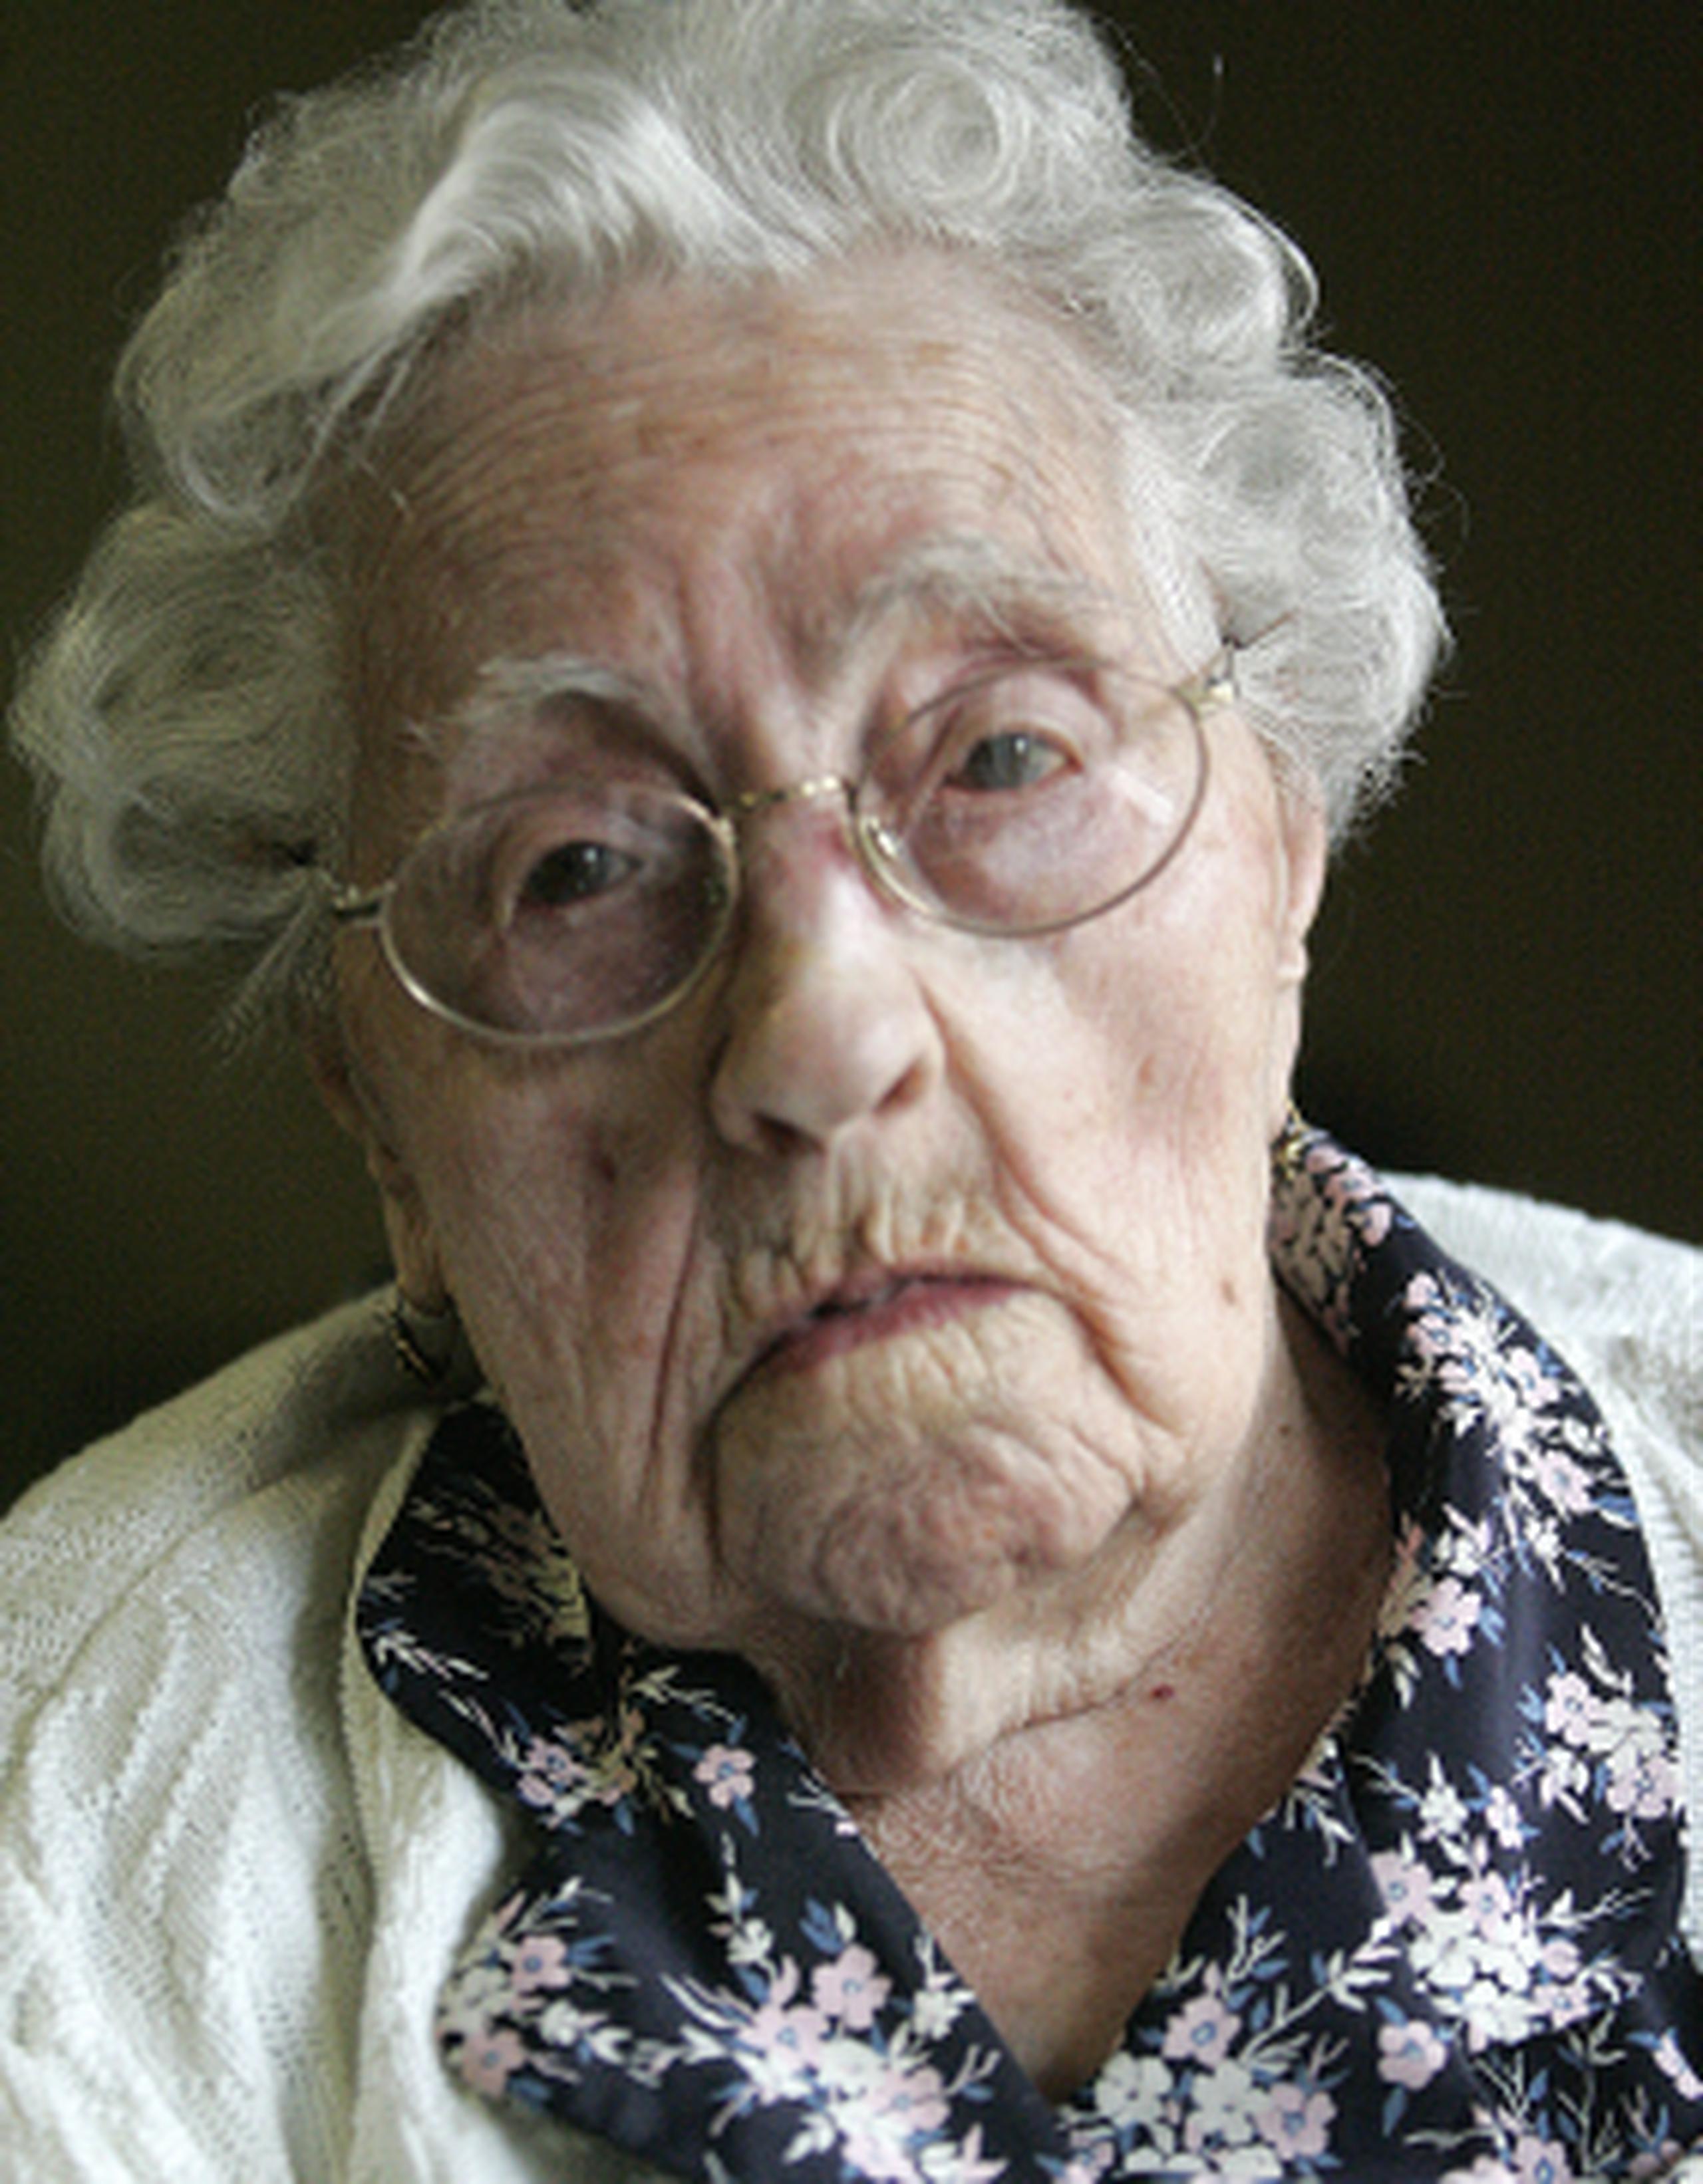 Dina Manfredini se convirtió en la persona más vieja del mundo. (AP/The Des Moines Register)